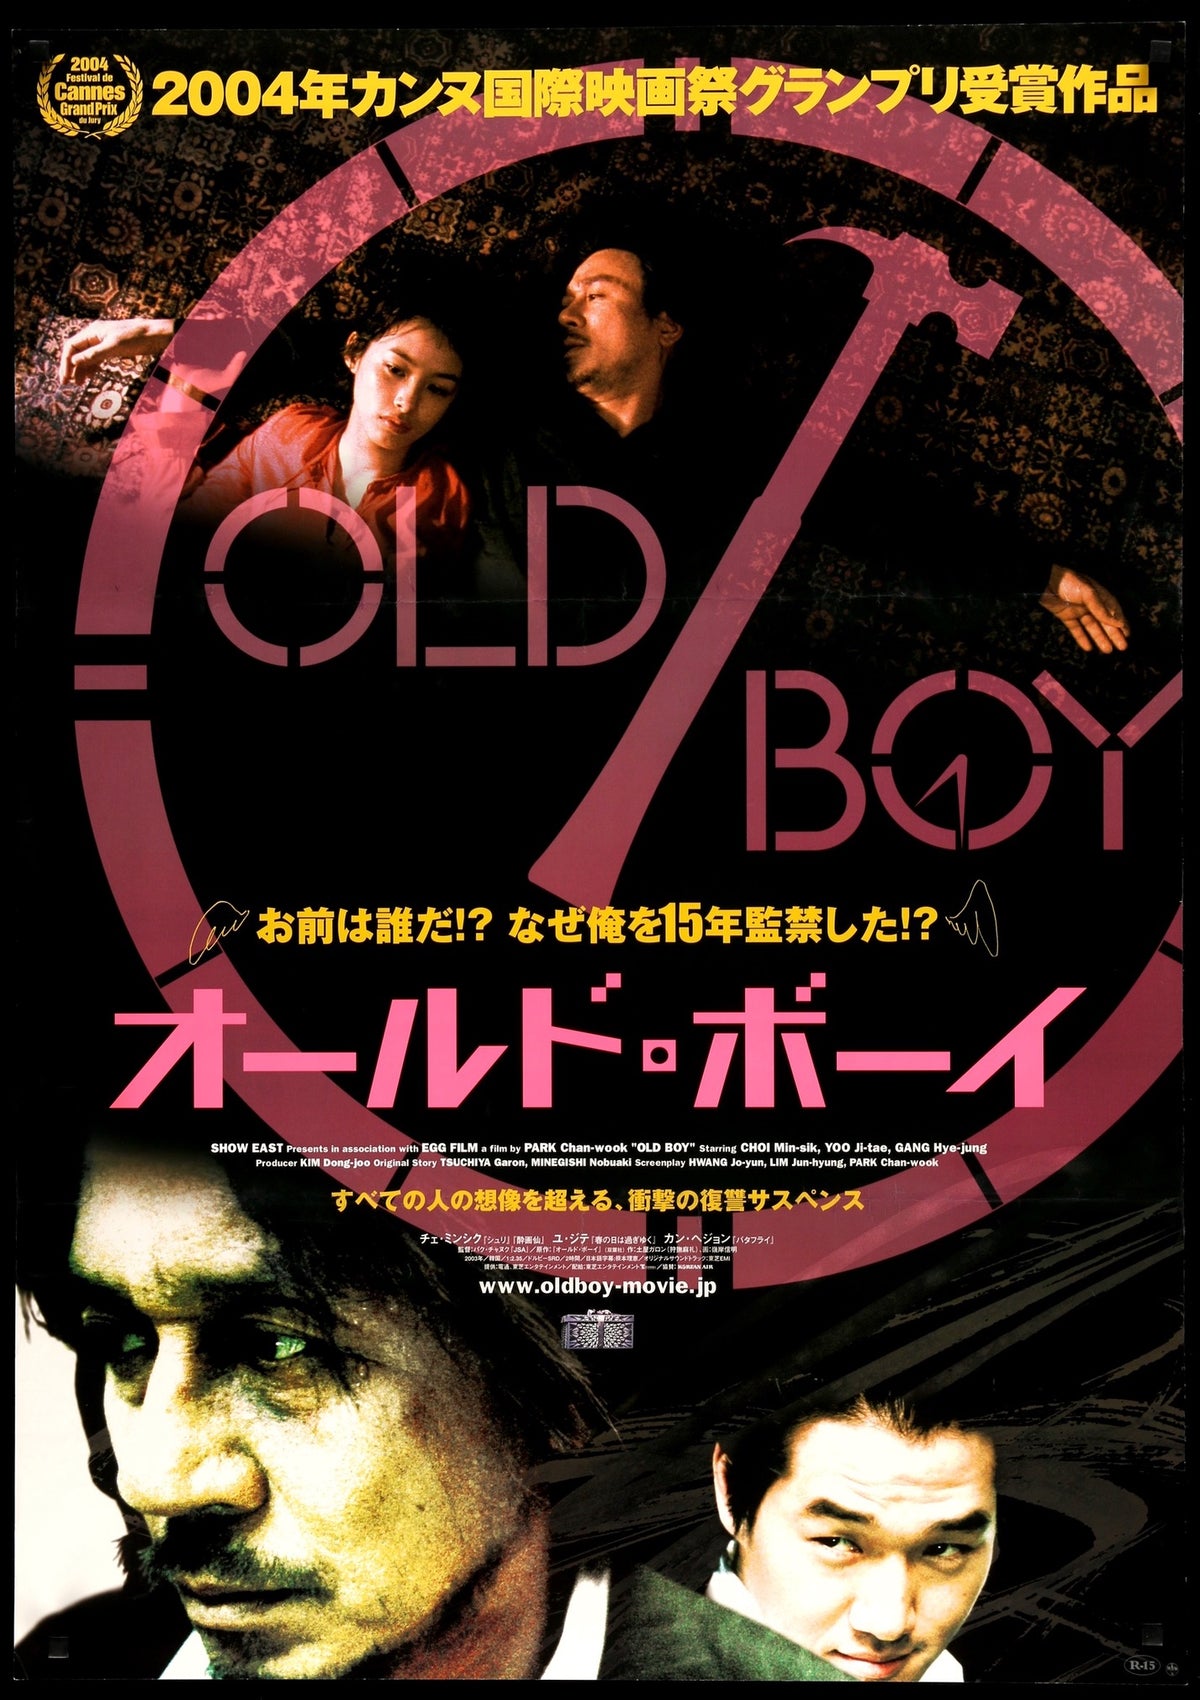 Oldboy (2003) original movie poster for sale at Original Film Art